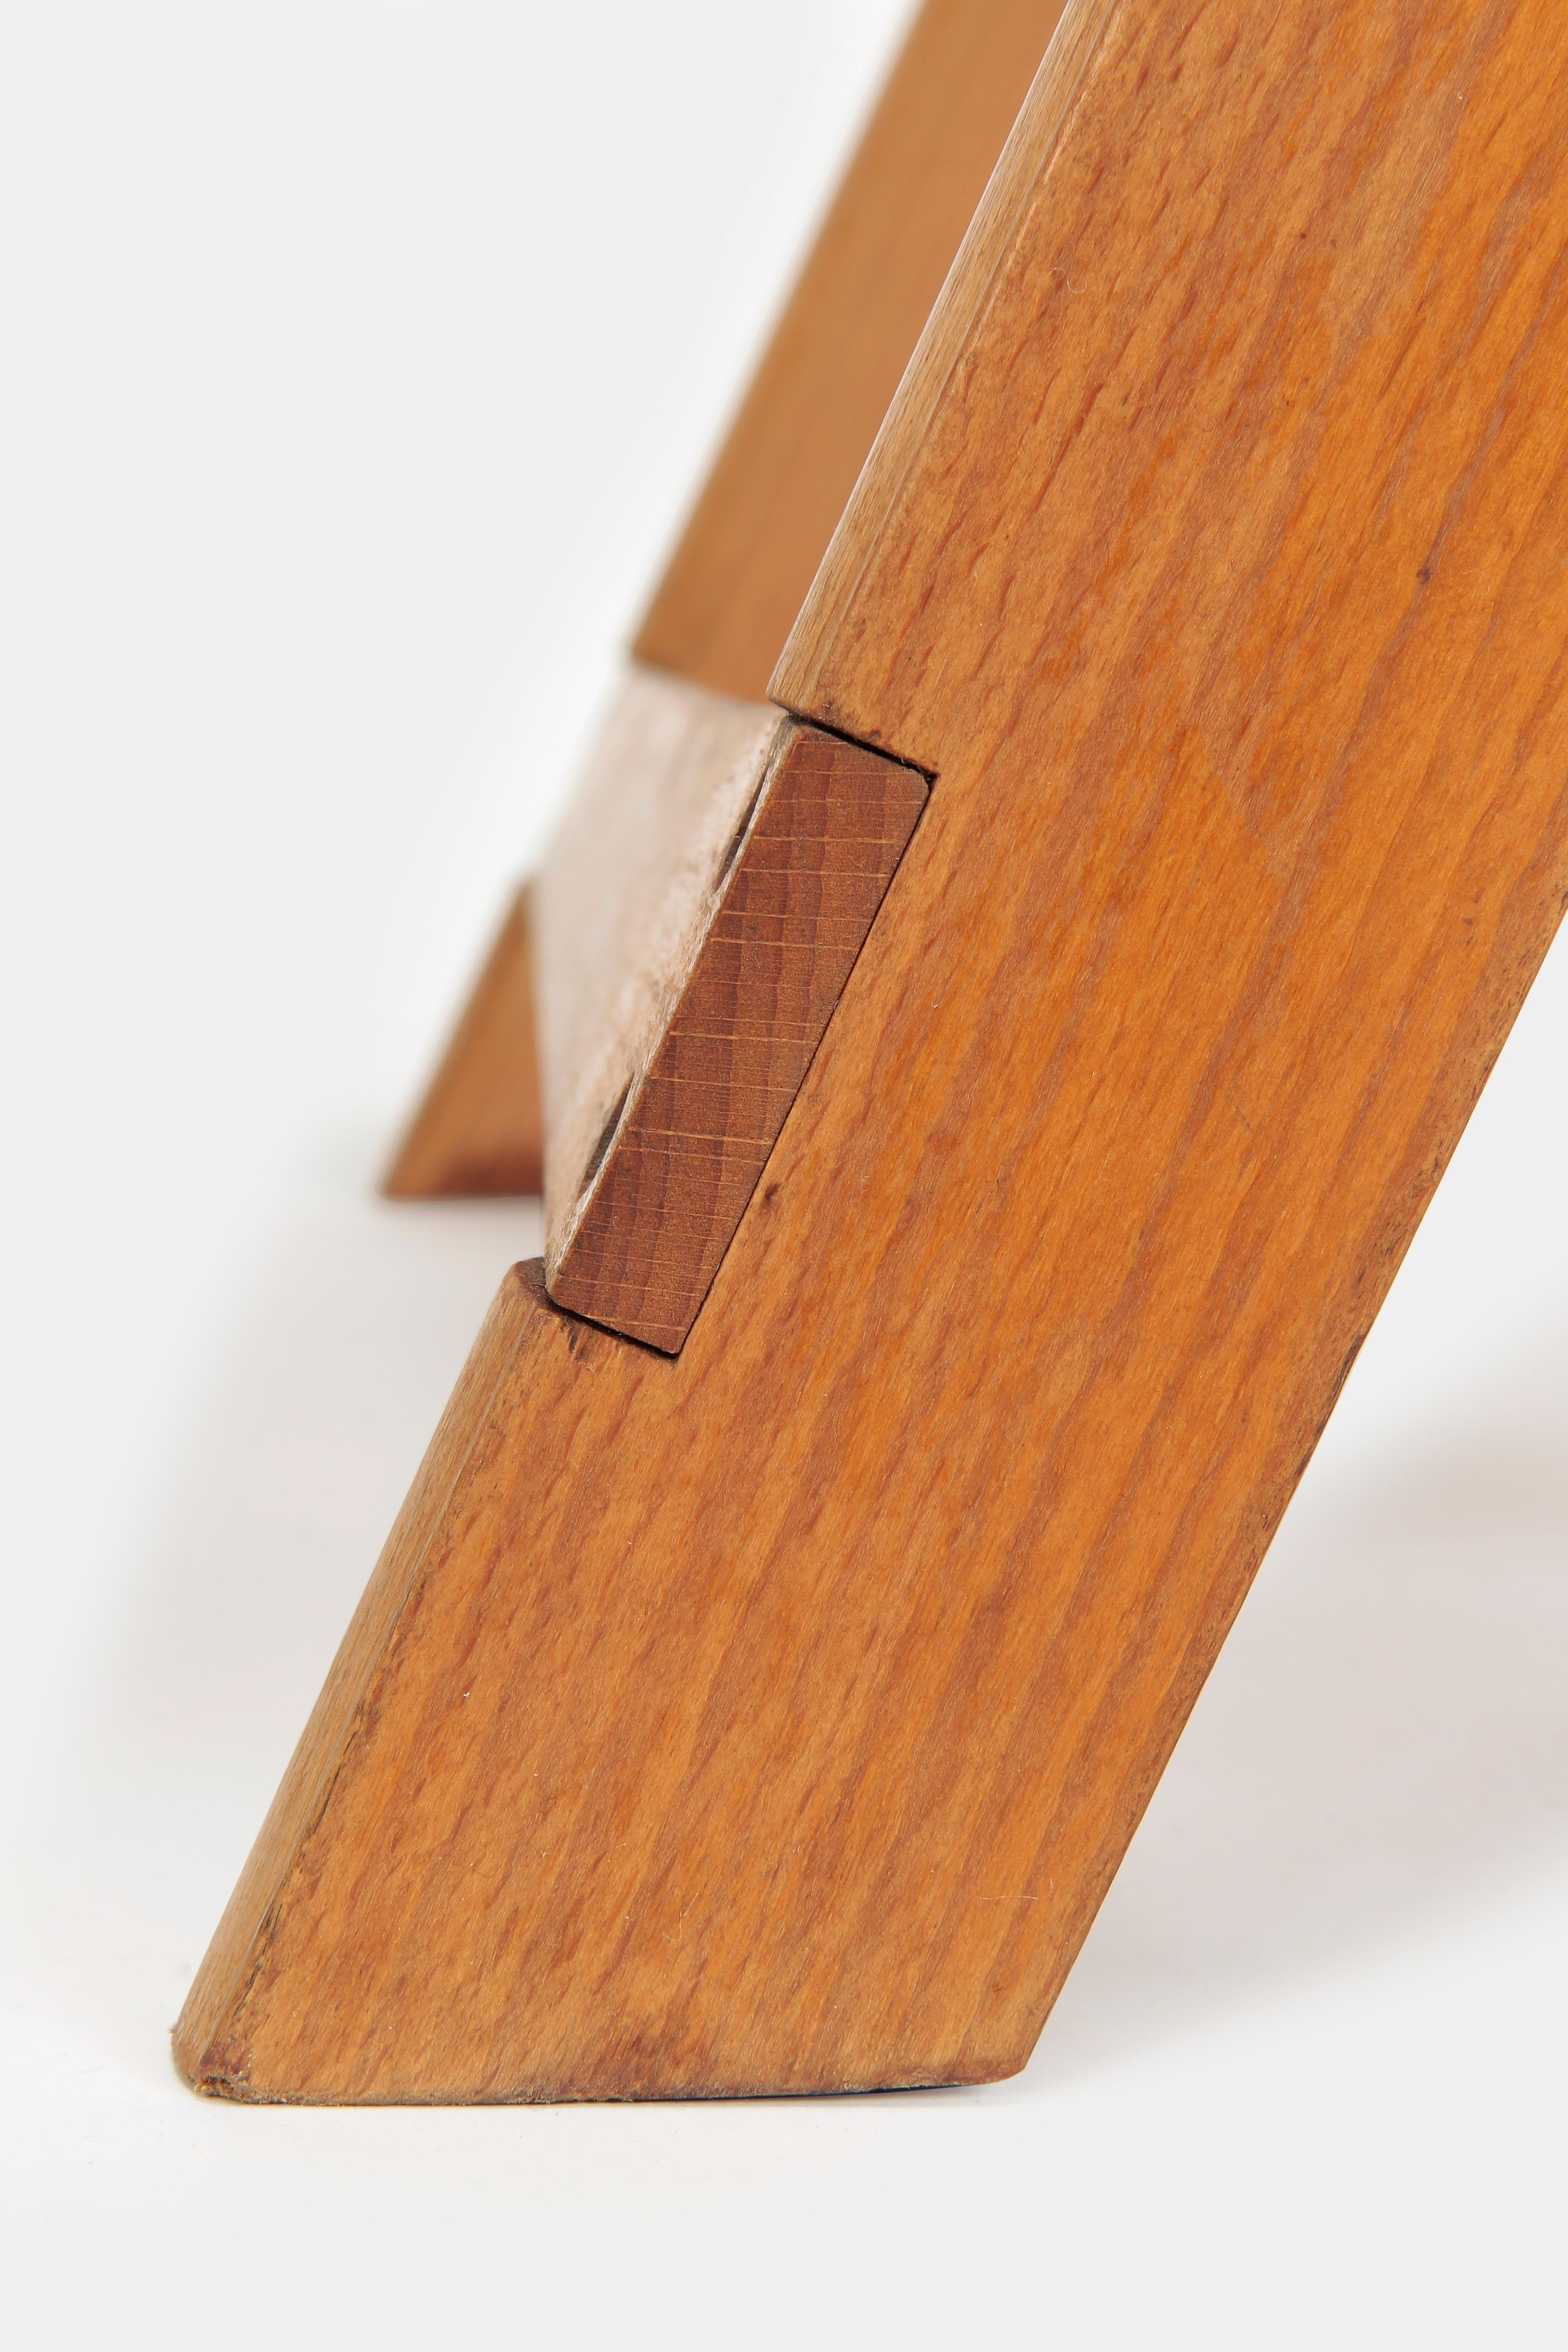 Swiss Midcentury Modern Birchwood Folding Chair, Wohnbedarf 1940s, Light Brown For Sale 7